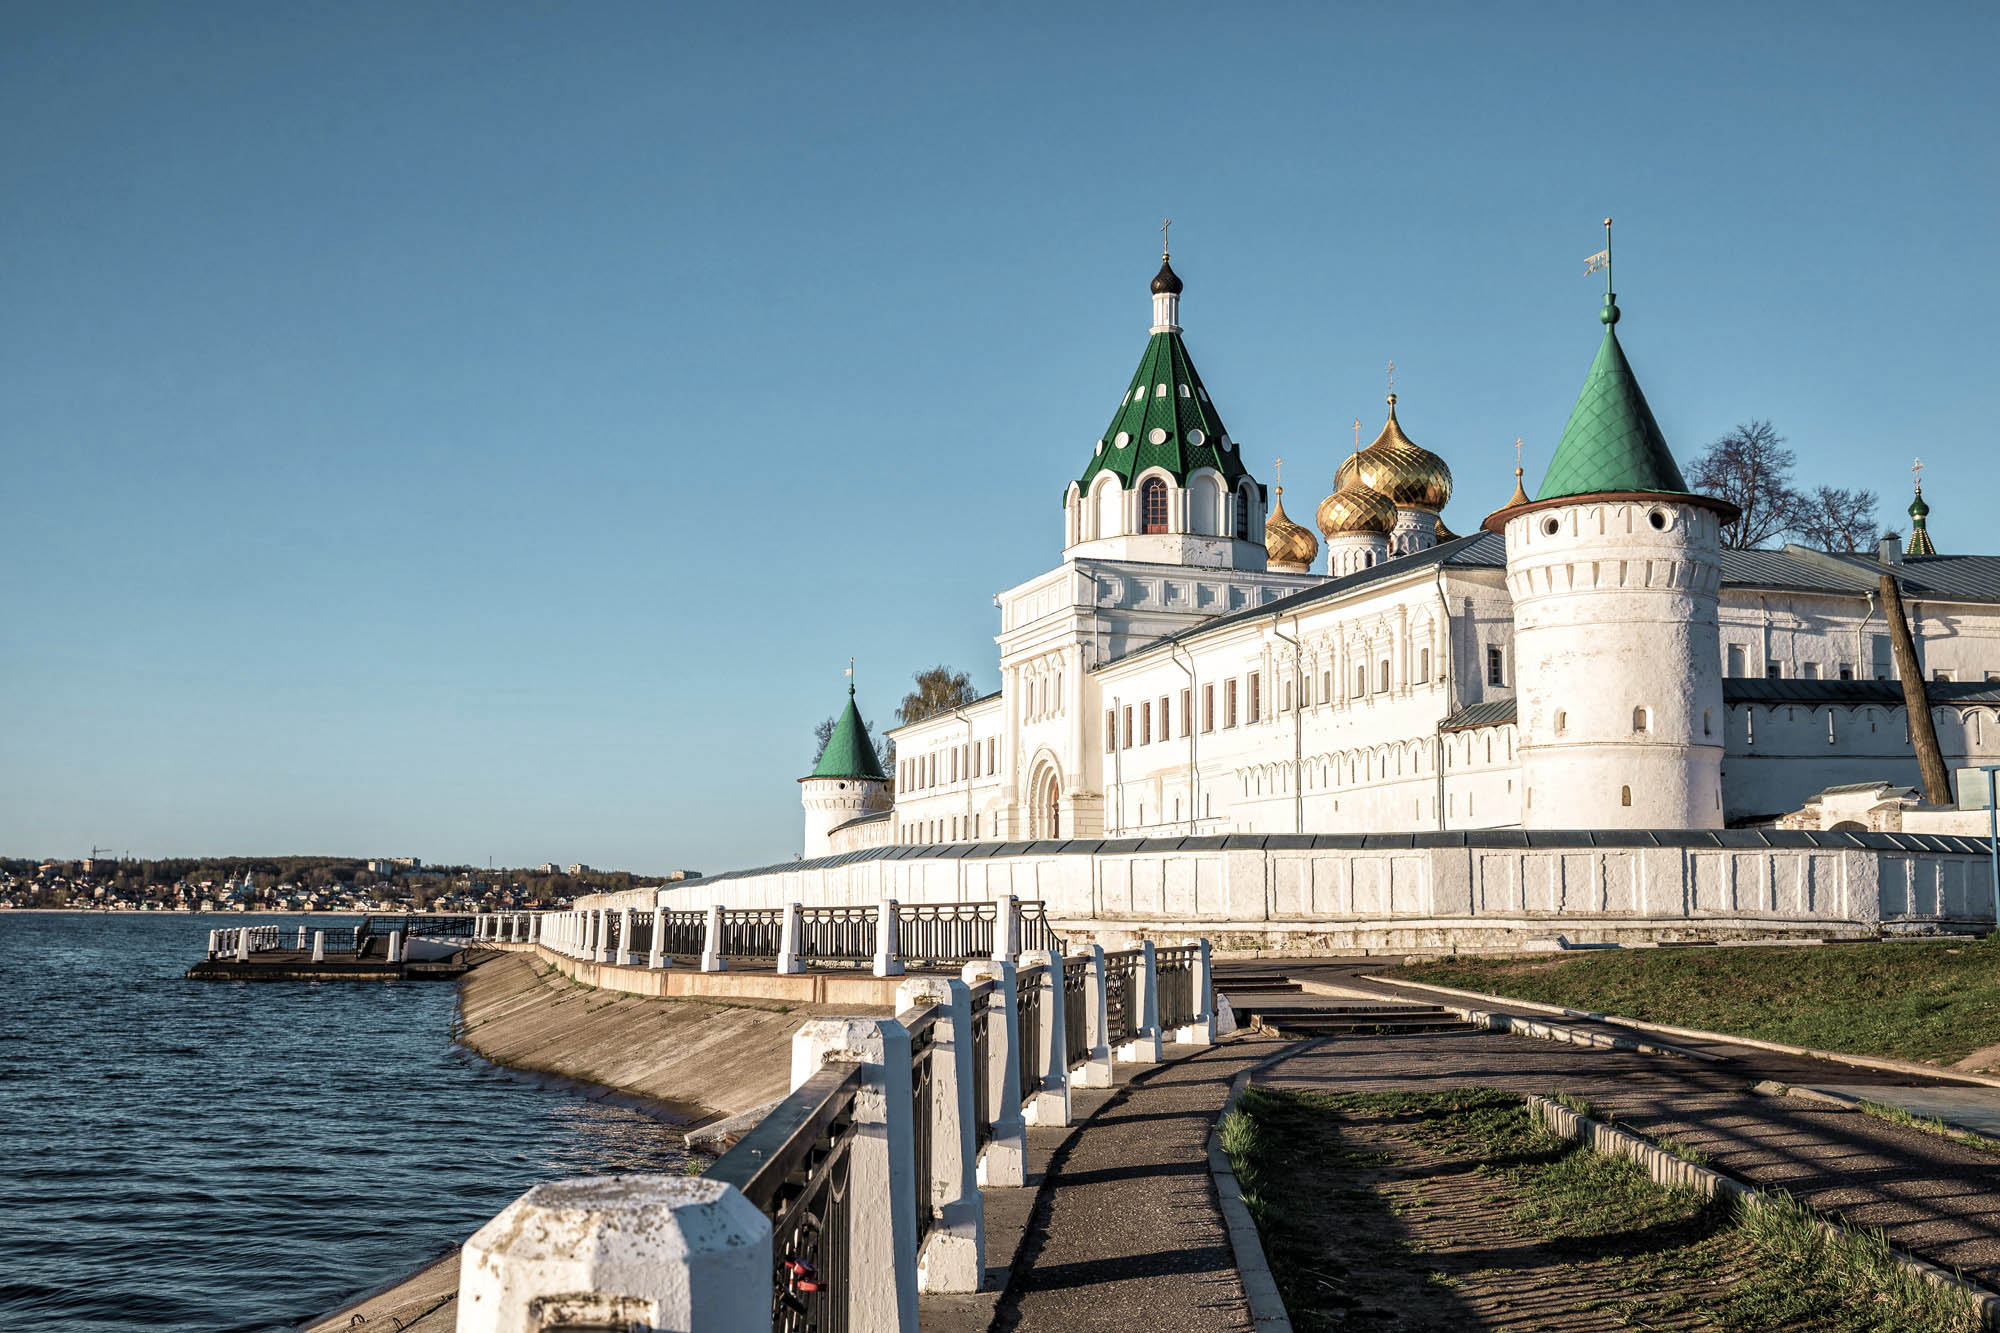 White kremlin of Rostov-Veliky in Russia, overlooking Lake Nero